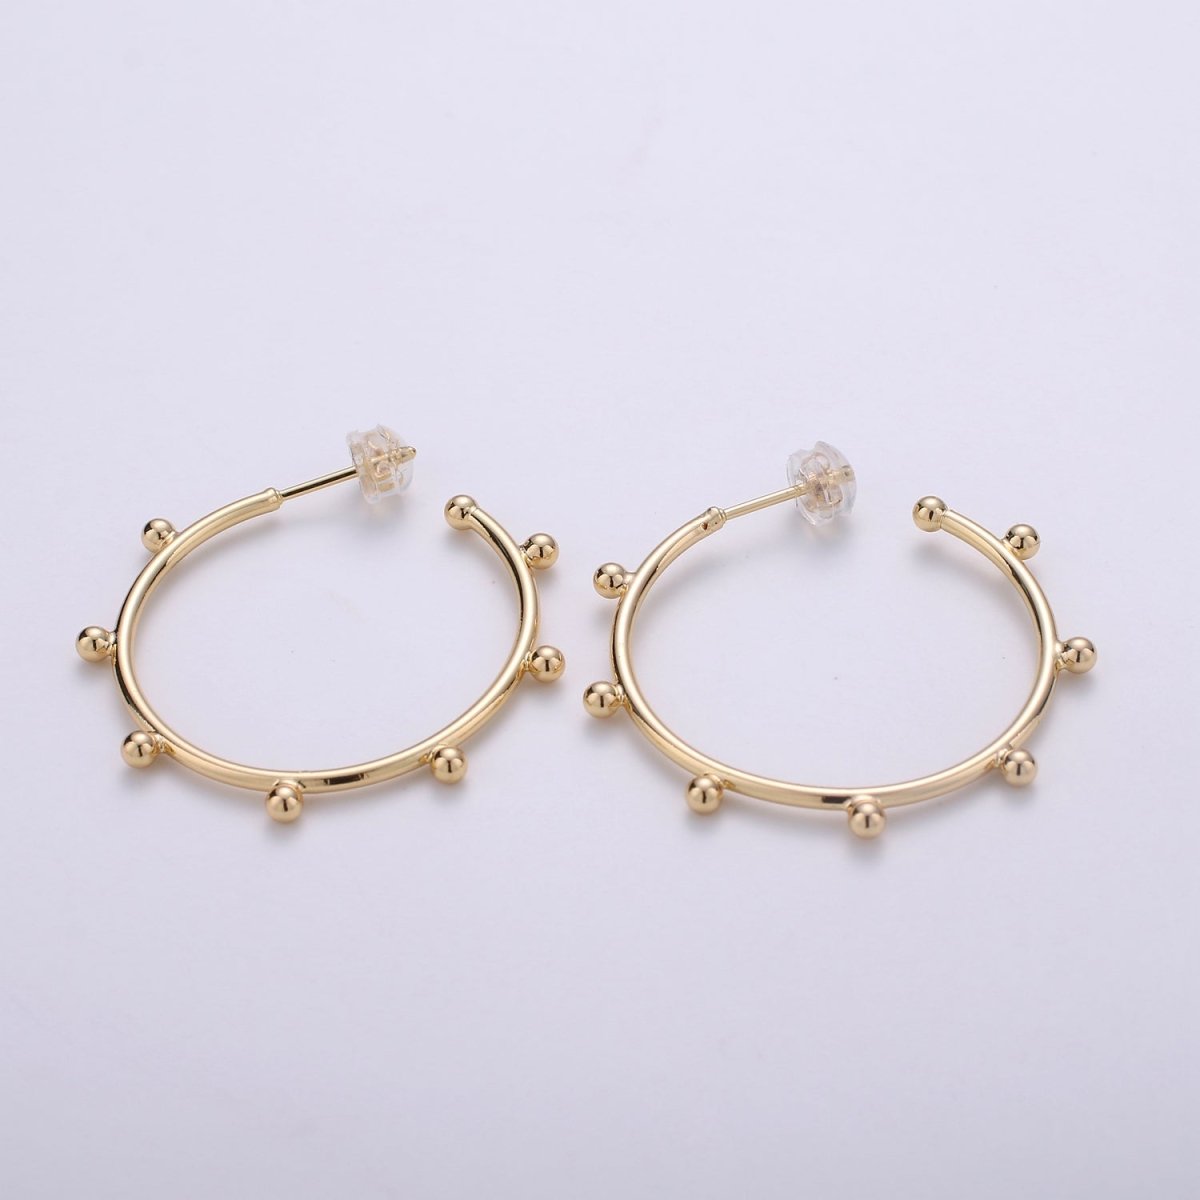 18K Gold Filled Ball Hoop Earrings, Beaded Hoop Earrings, Boho Hoop Earrings, Gold Ball Hoop Earrings, 25,35, 45mm Gold Hoop Earring Q-097 - Q-099 - DLUXCA